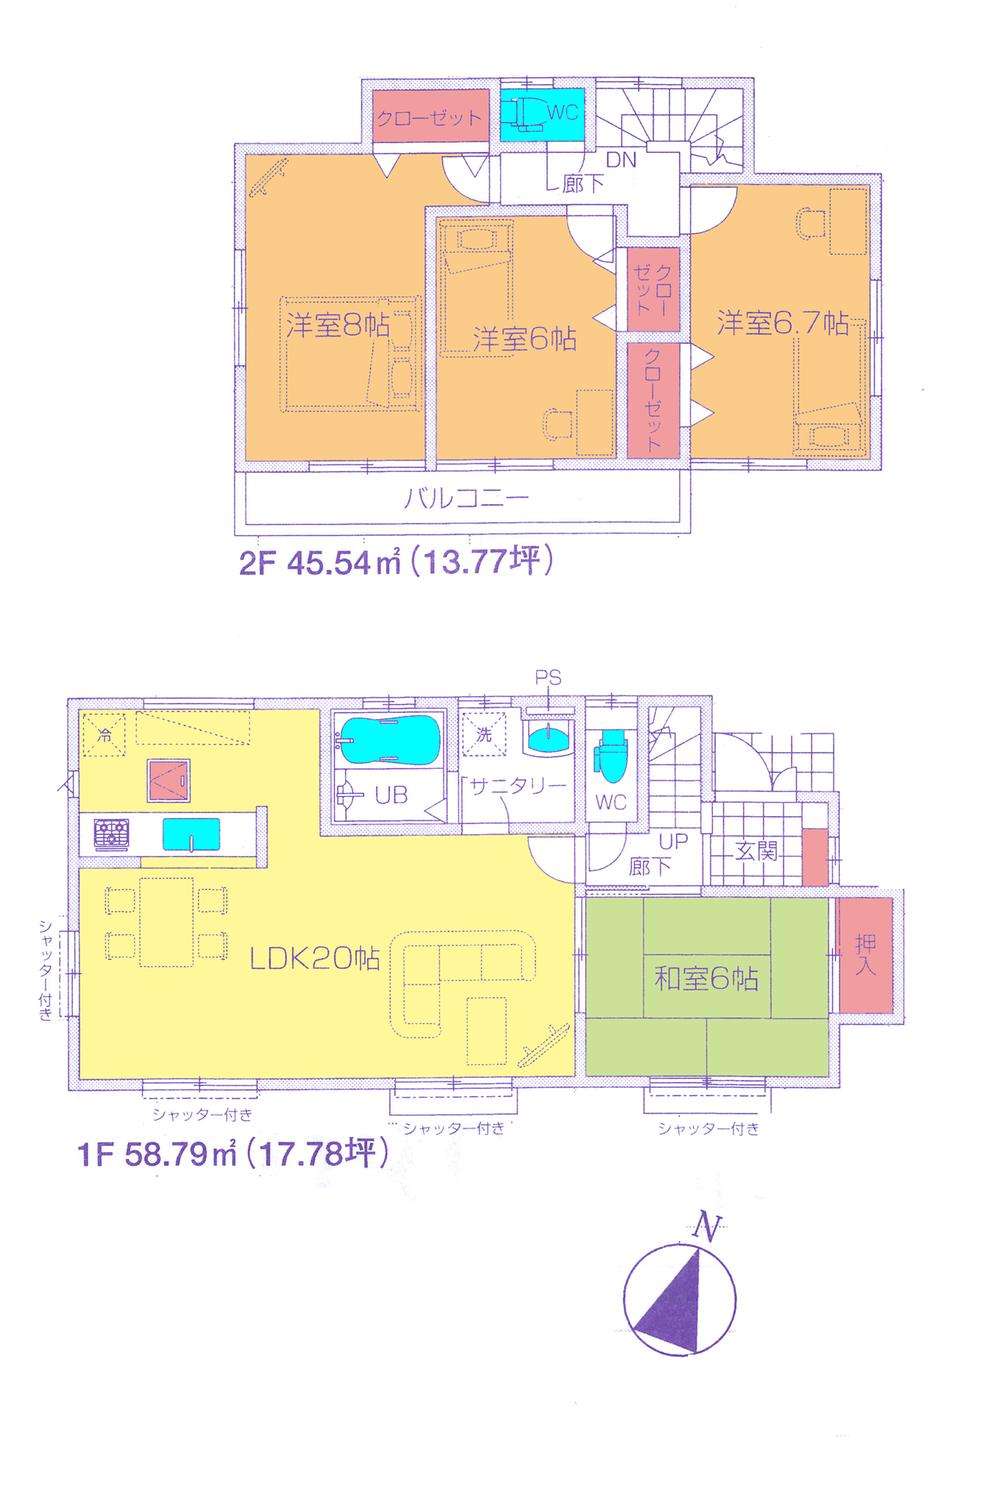 Floor plan. (1 Building), Price 25,800,000 yen, 4LDK, Land area 200.1 sq m , Building area 104.33 sq m